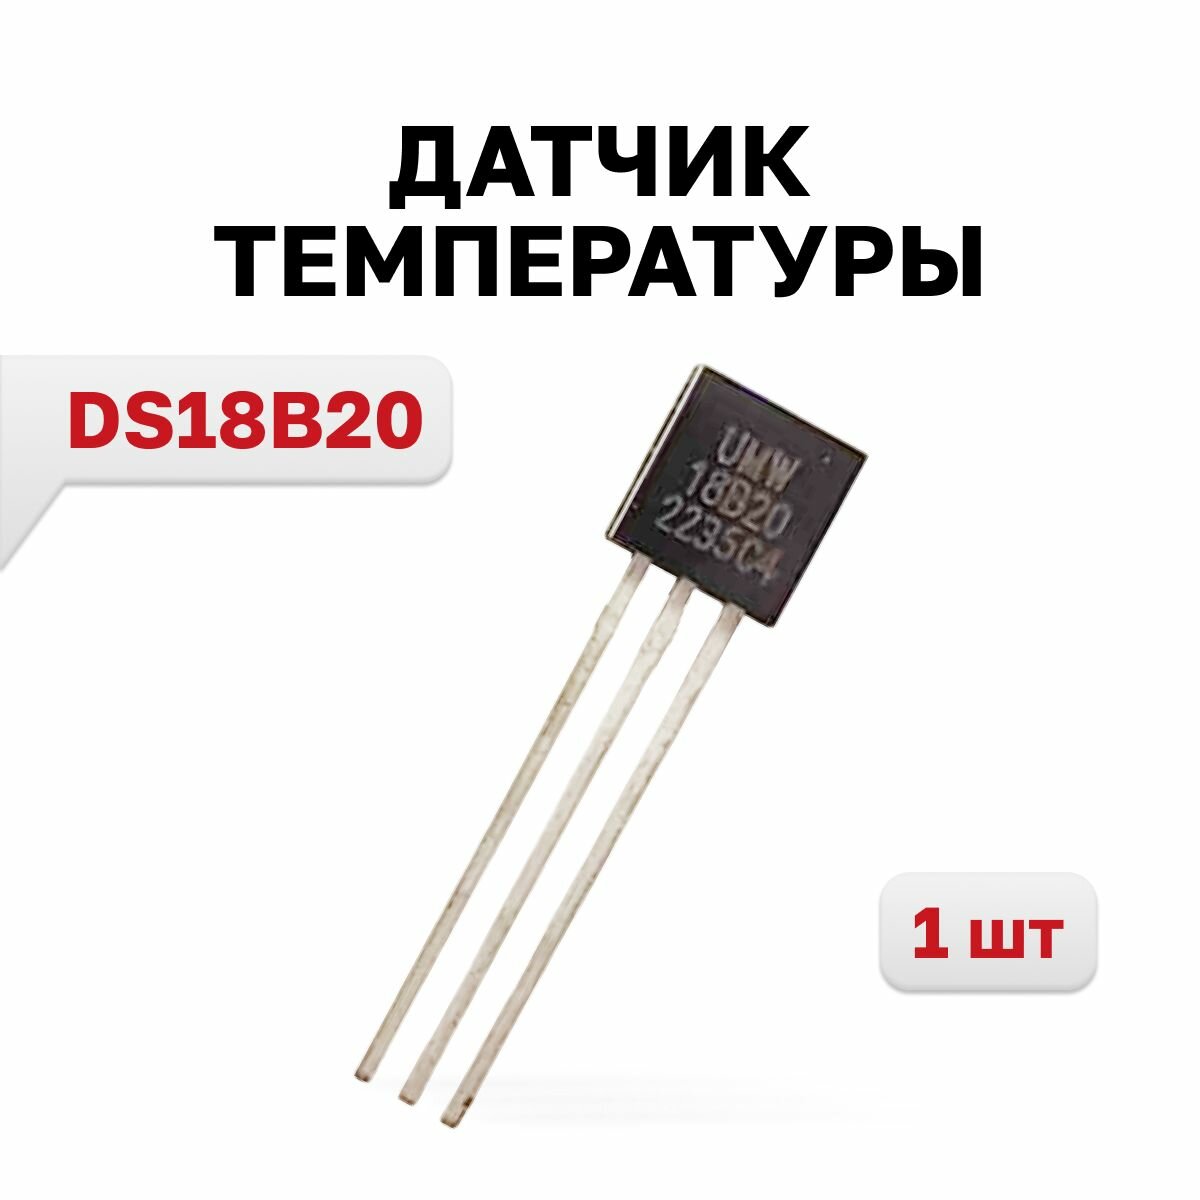 DS18B20, датчик температуры MSKSEMI, 1 шт.